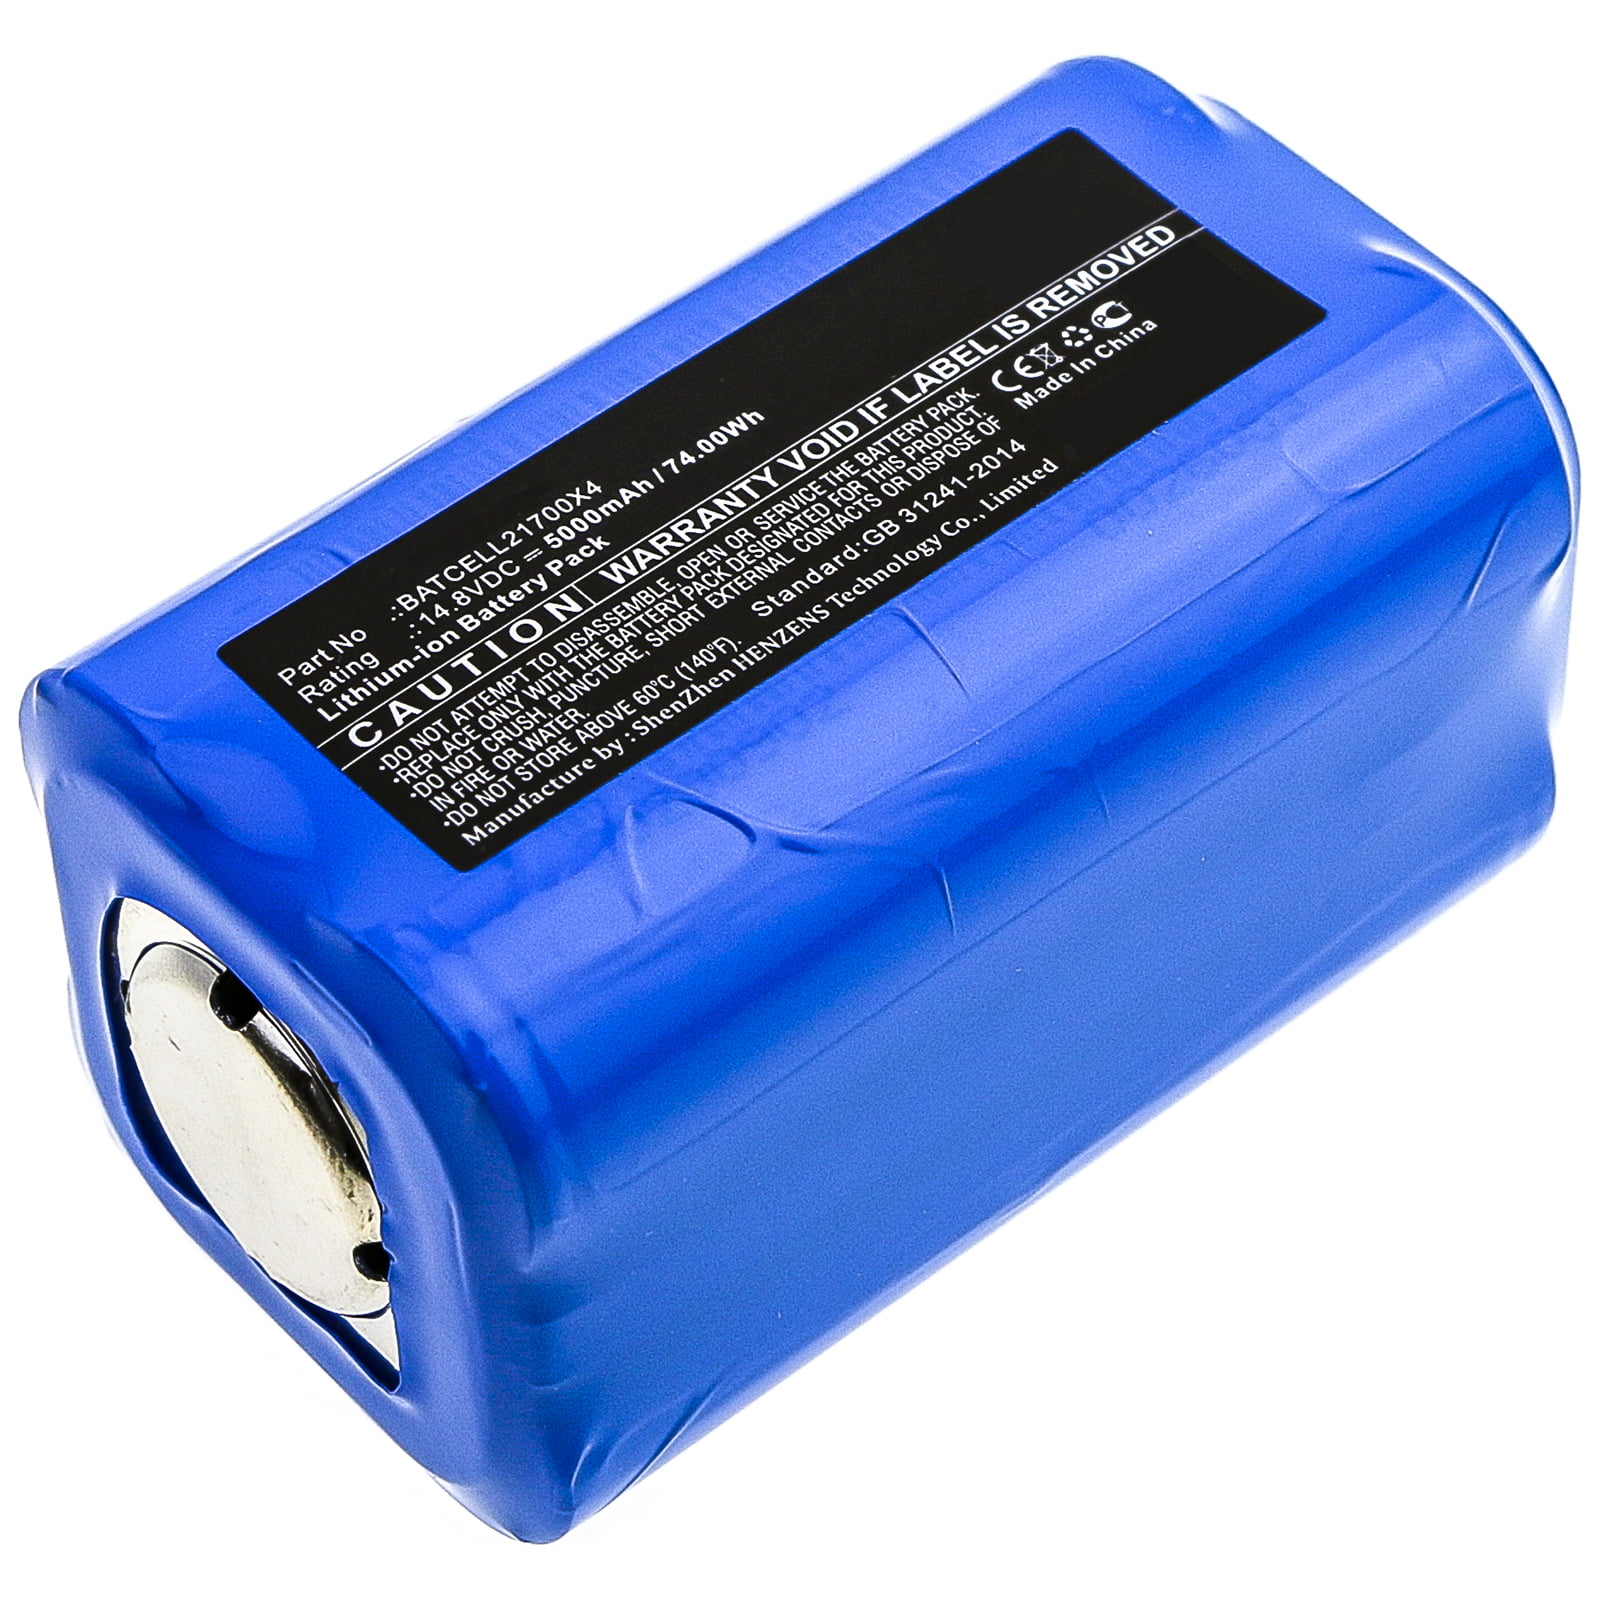 Bateria para Swissvoice dp500 eco Plus dp550 BT gp1010 gphc 05rn01 gp hc05rn01 